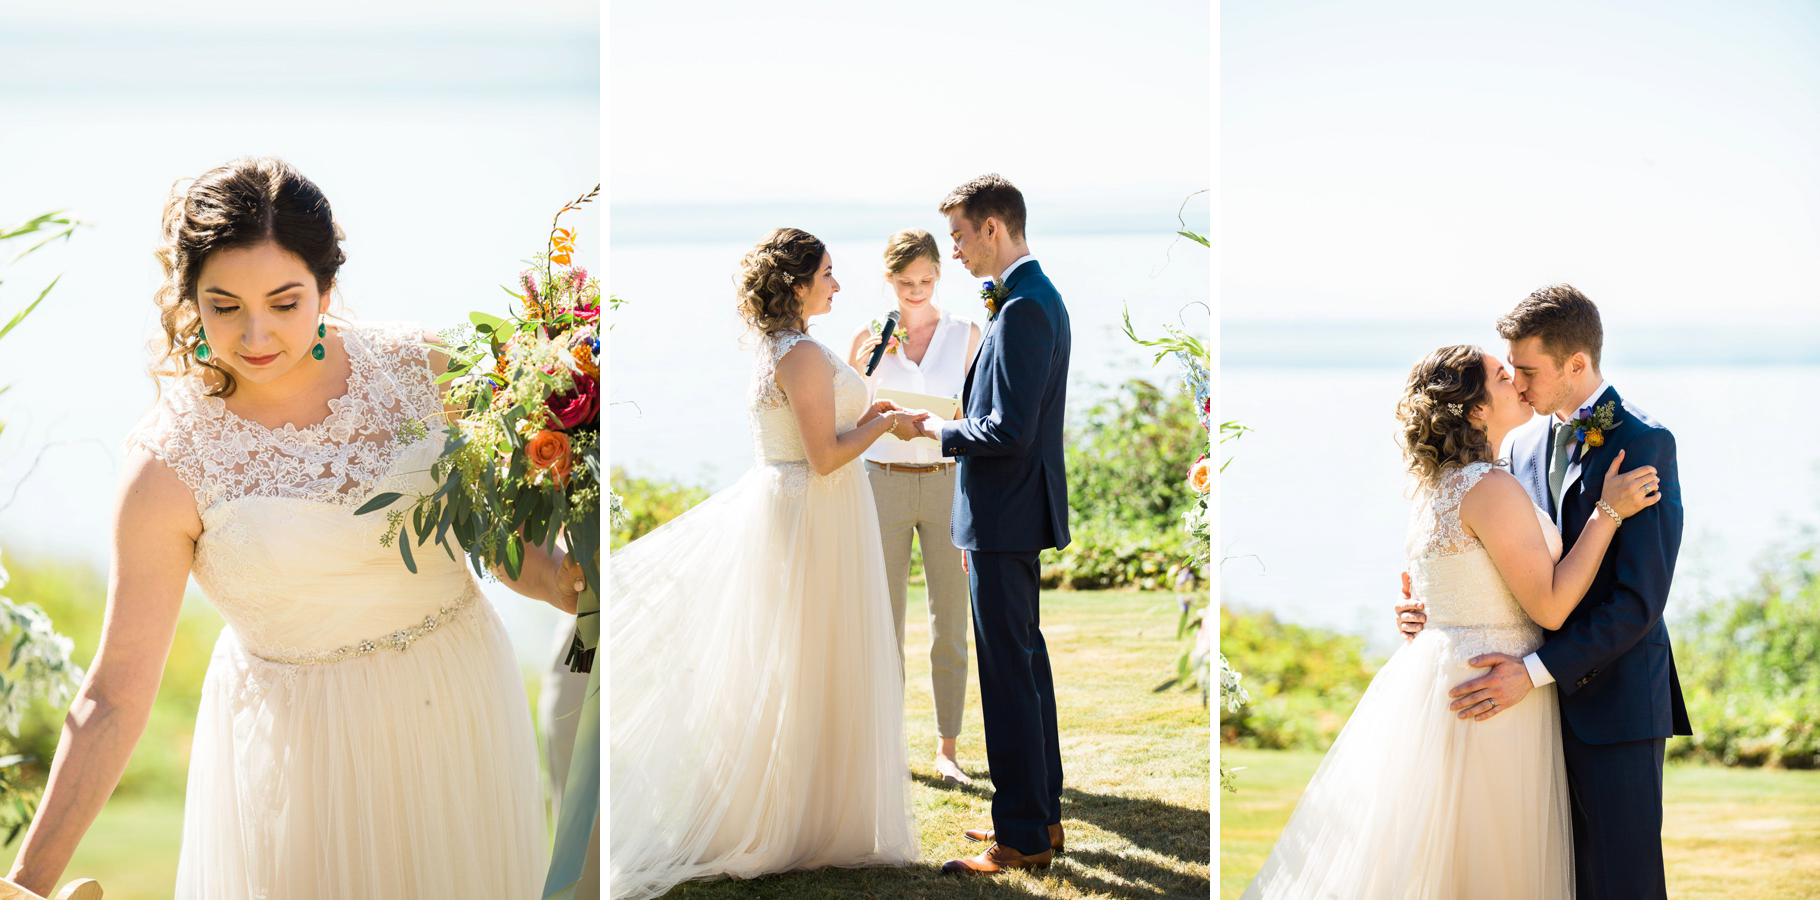 36-Eloping-in-Seattle-Wedding-Photographer-PNW-Locations-Waterfront-Backyard-Reception.jpg